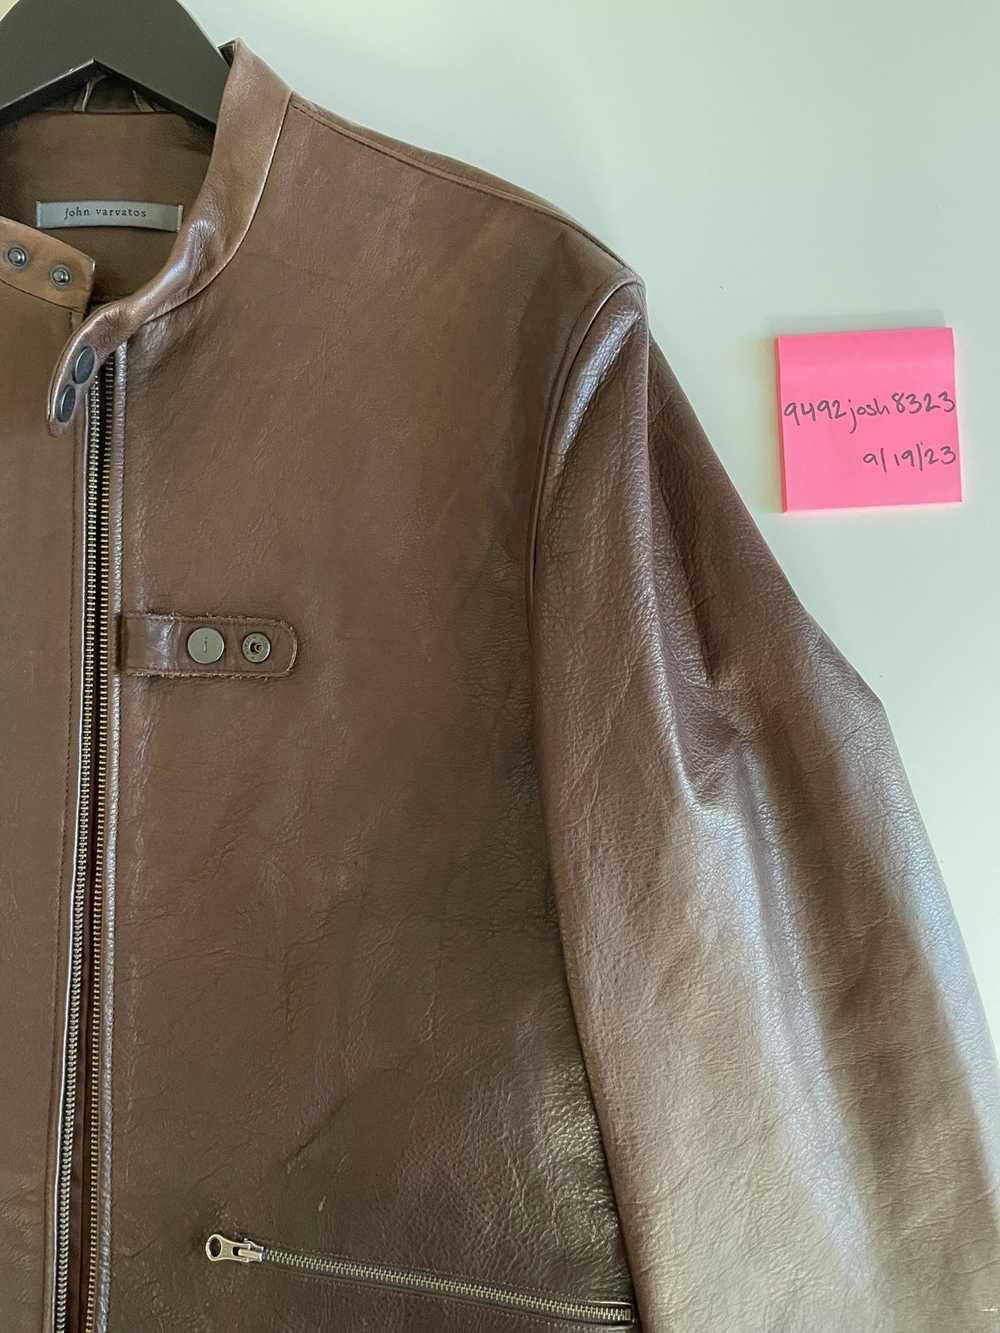 John Varvatos Heavy Leather Jacket - image 8